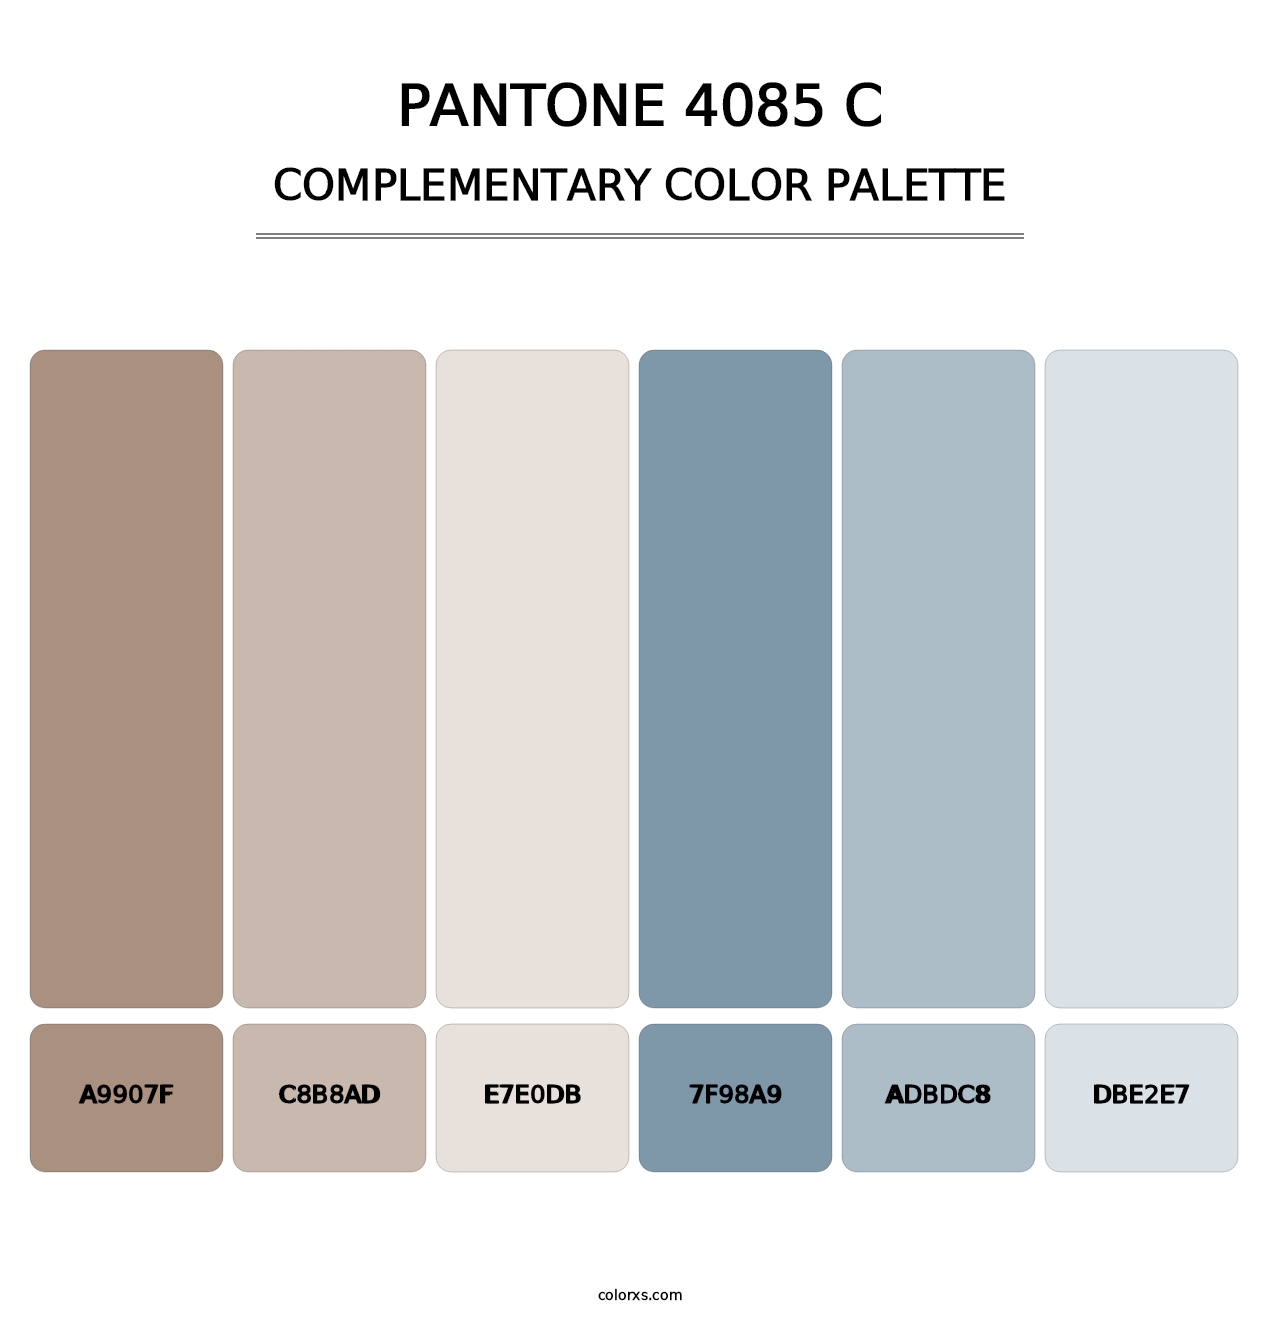 PANTONE 4085 C - Complementary Color Palette